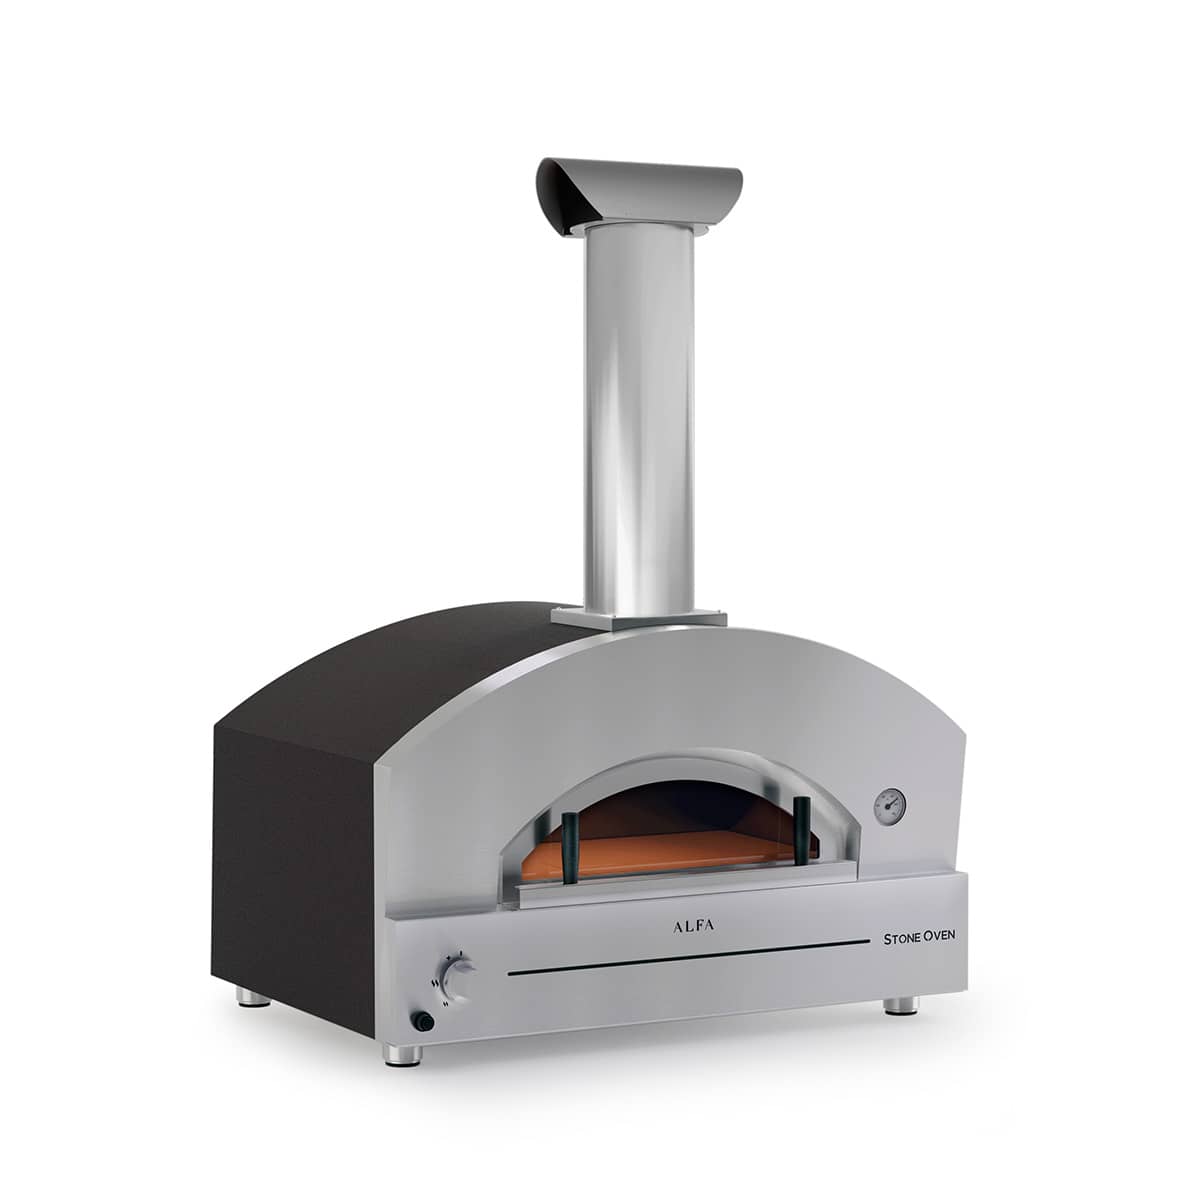 https://mldbdn1wjr5w.i.optimole.com/w:auto/h:auto/q:mauto/f:best/https://bestofbackyard.com/wp-content/uploads/2020/05/stone-oven-pizza-oven-outdoor-cooking.jpg